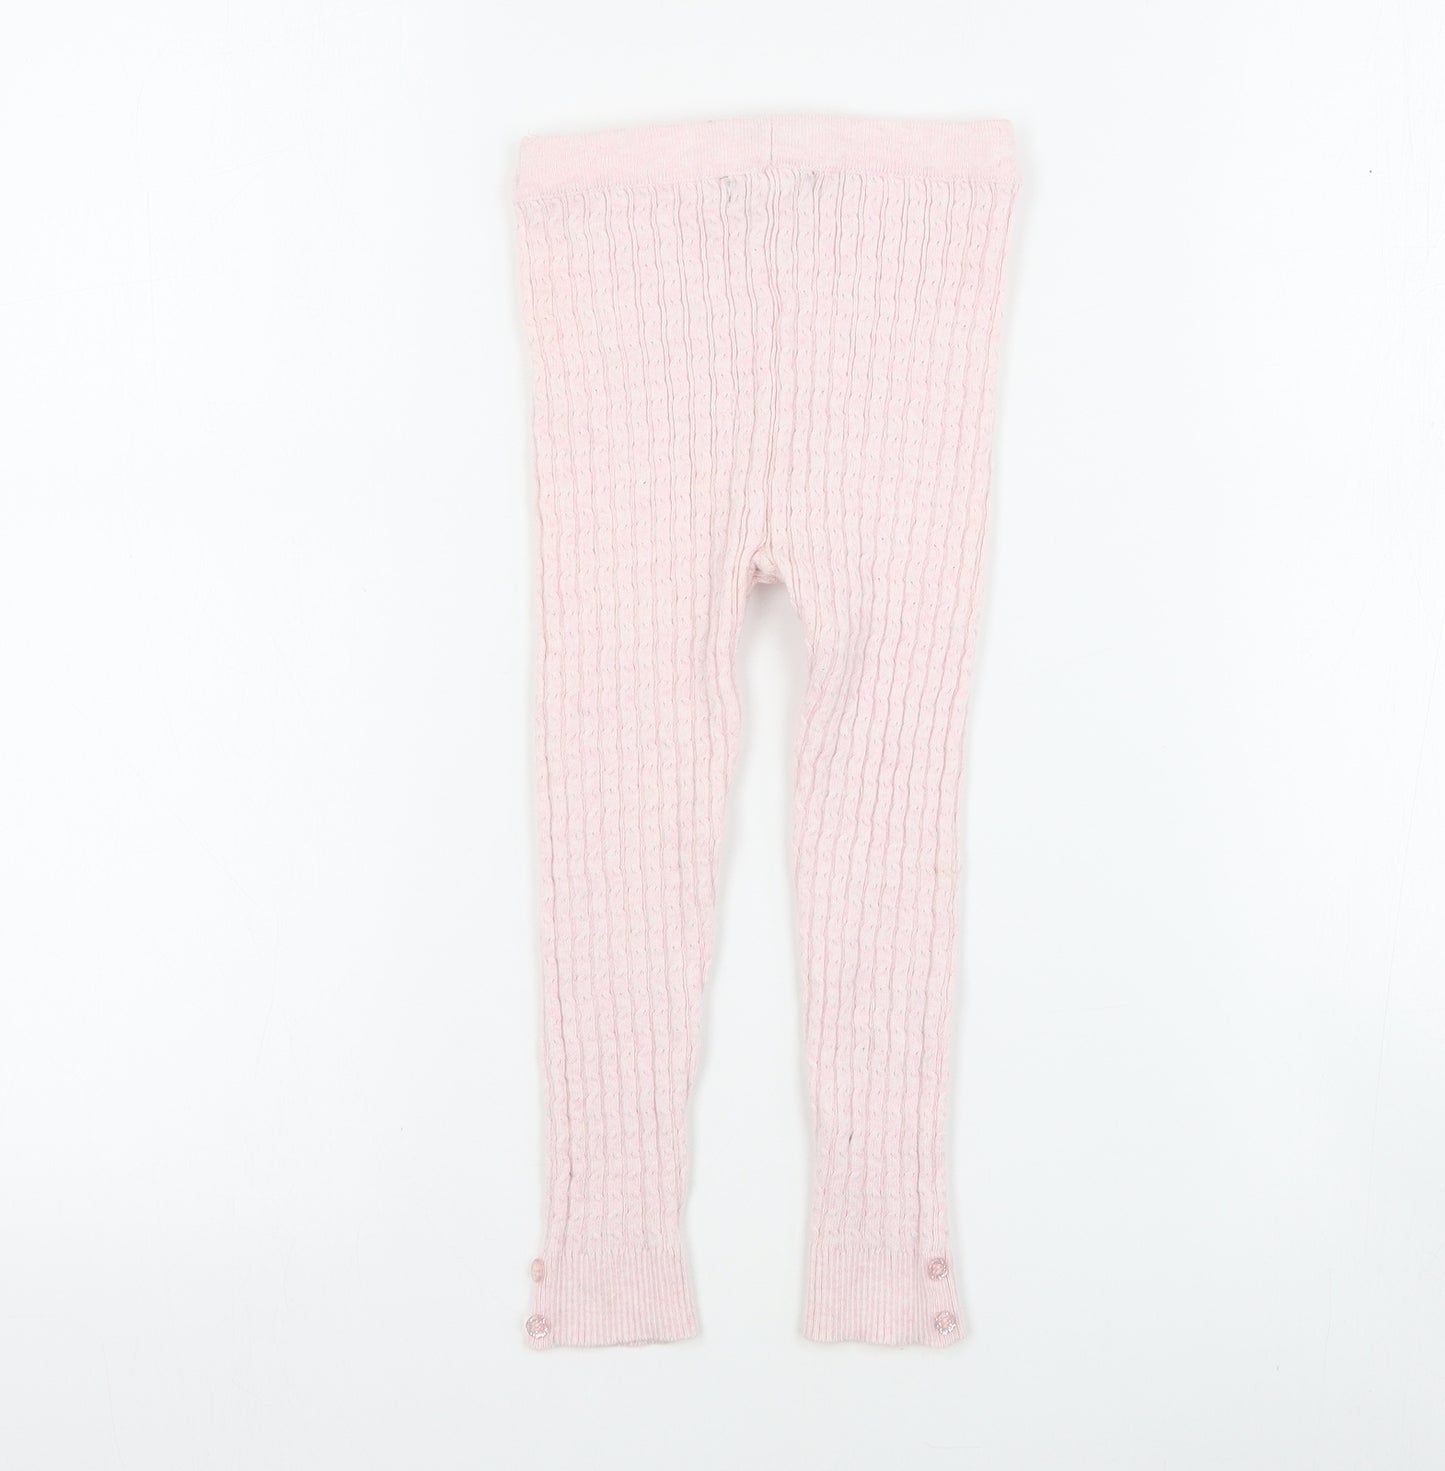 Primark Girls Pink  Cotton Jegging Trousers Size 3-4 Years  Regular Pullover - Legging